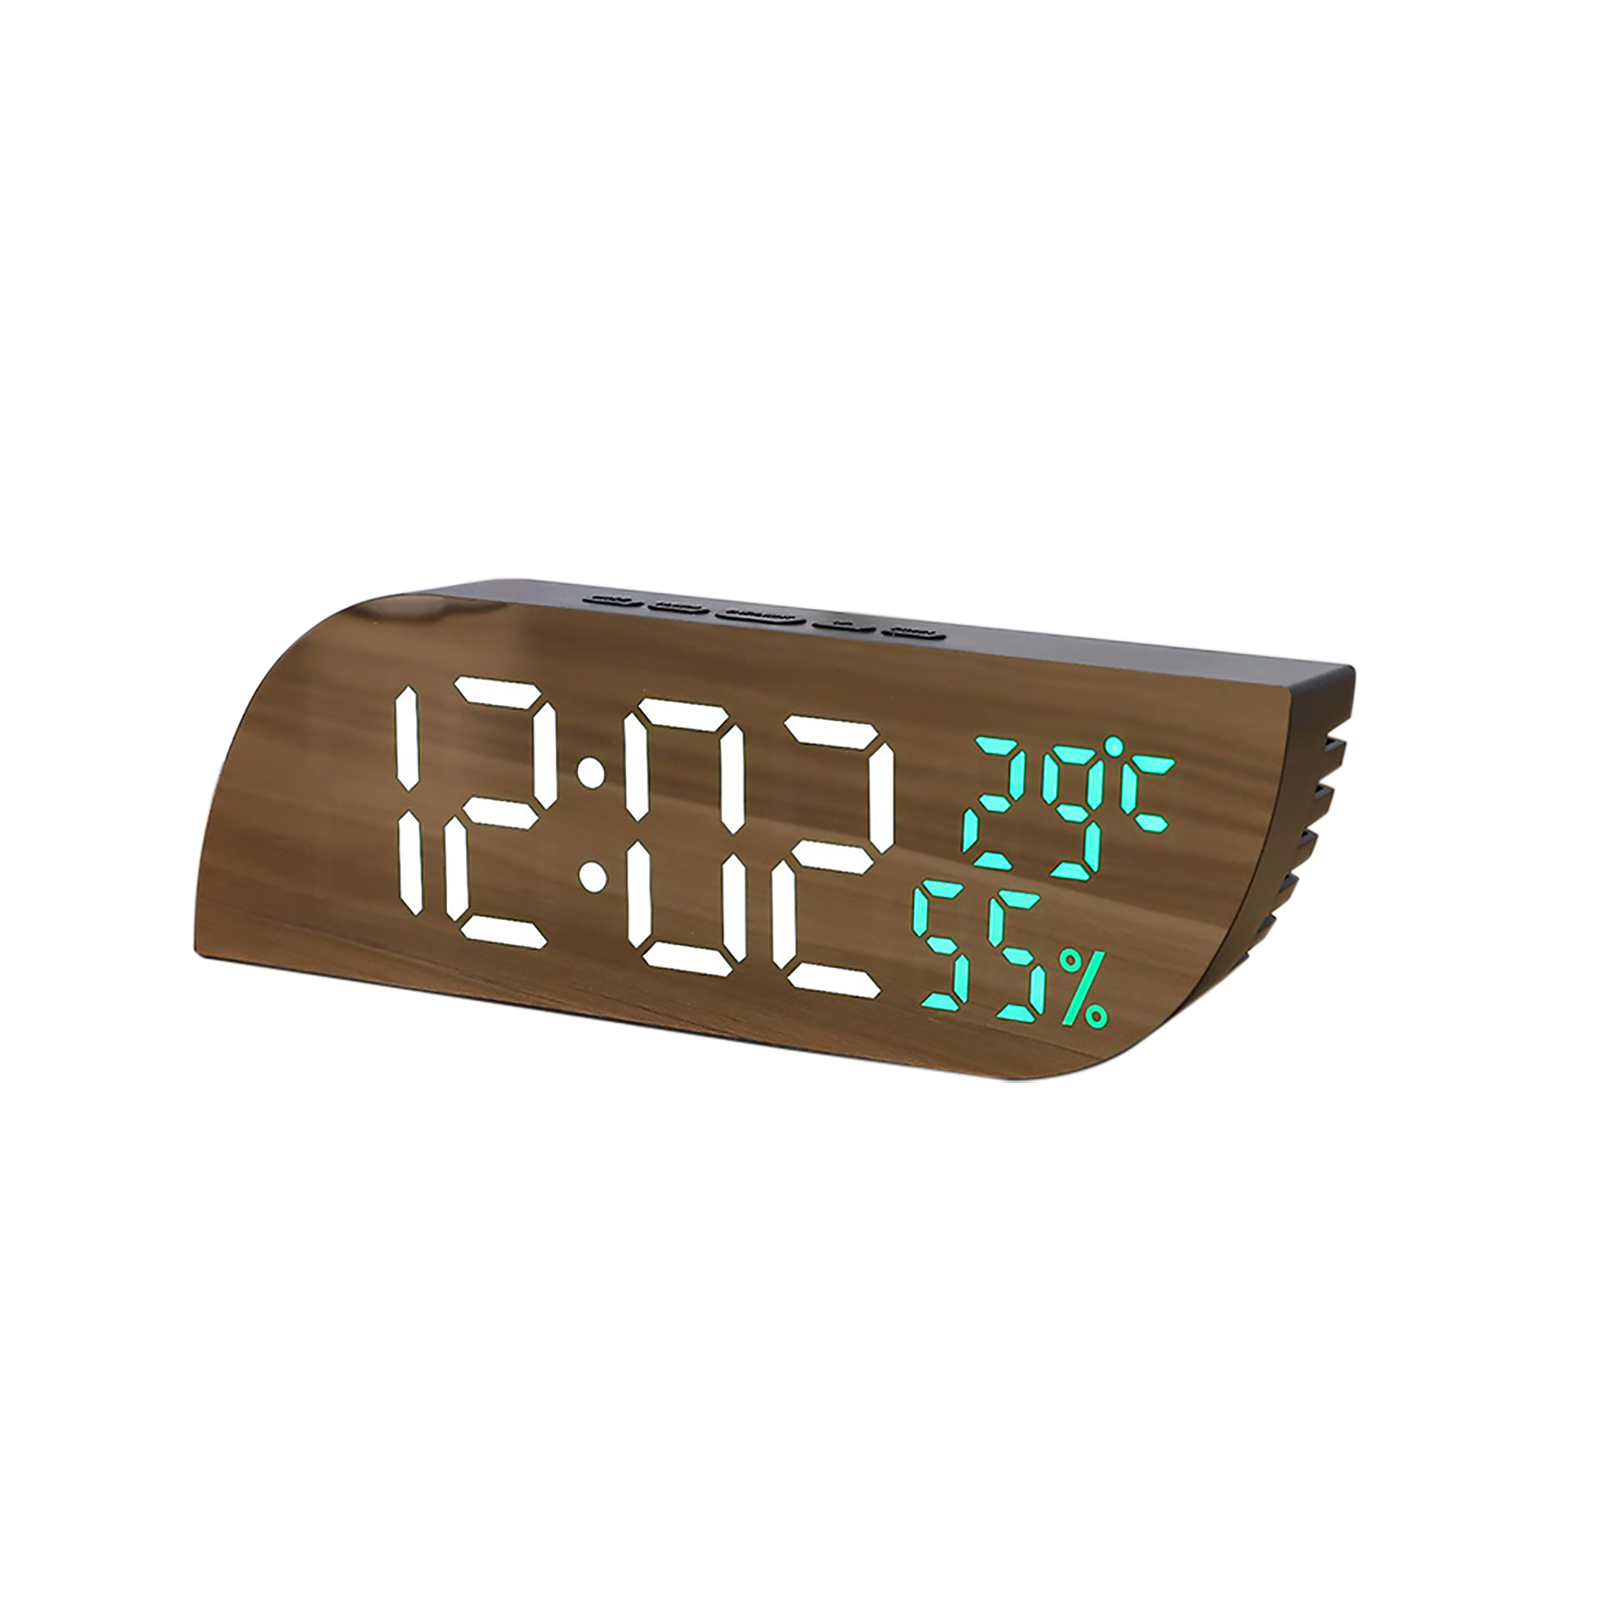 Digital Alarm Clock Mirror Surface LED Digital Clock With Snooze Function 2 Levels Brightness Temperature Humidity Display